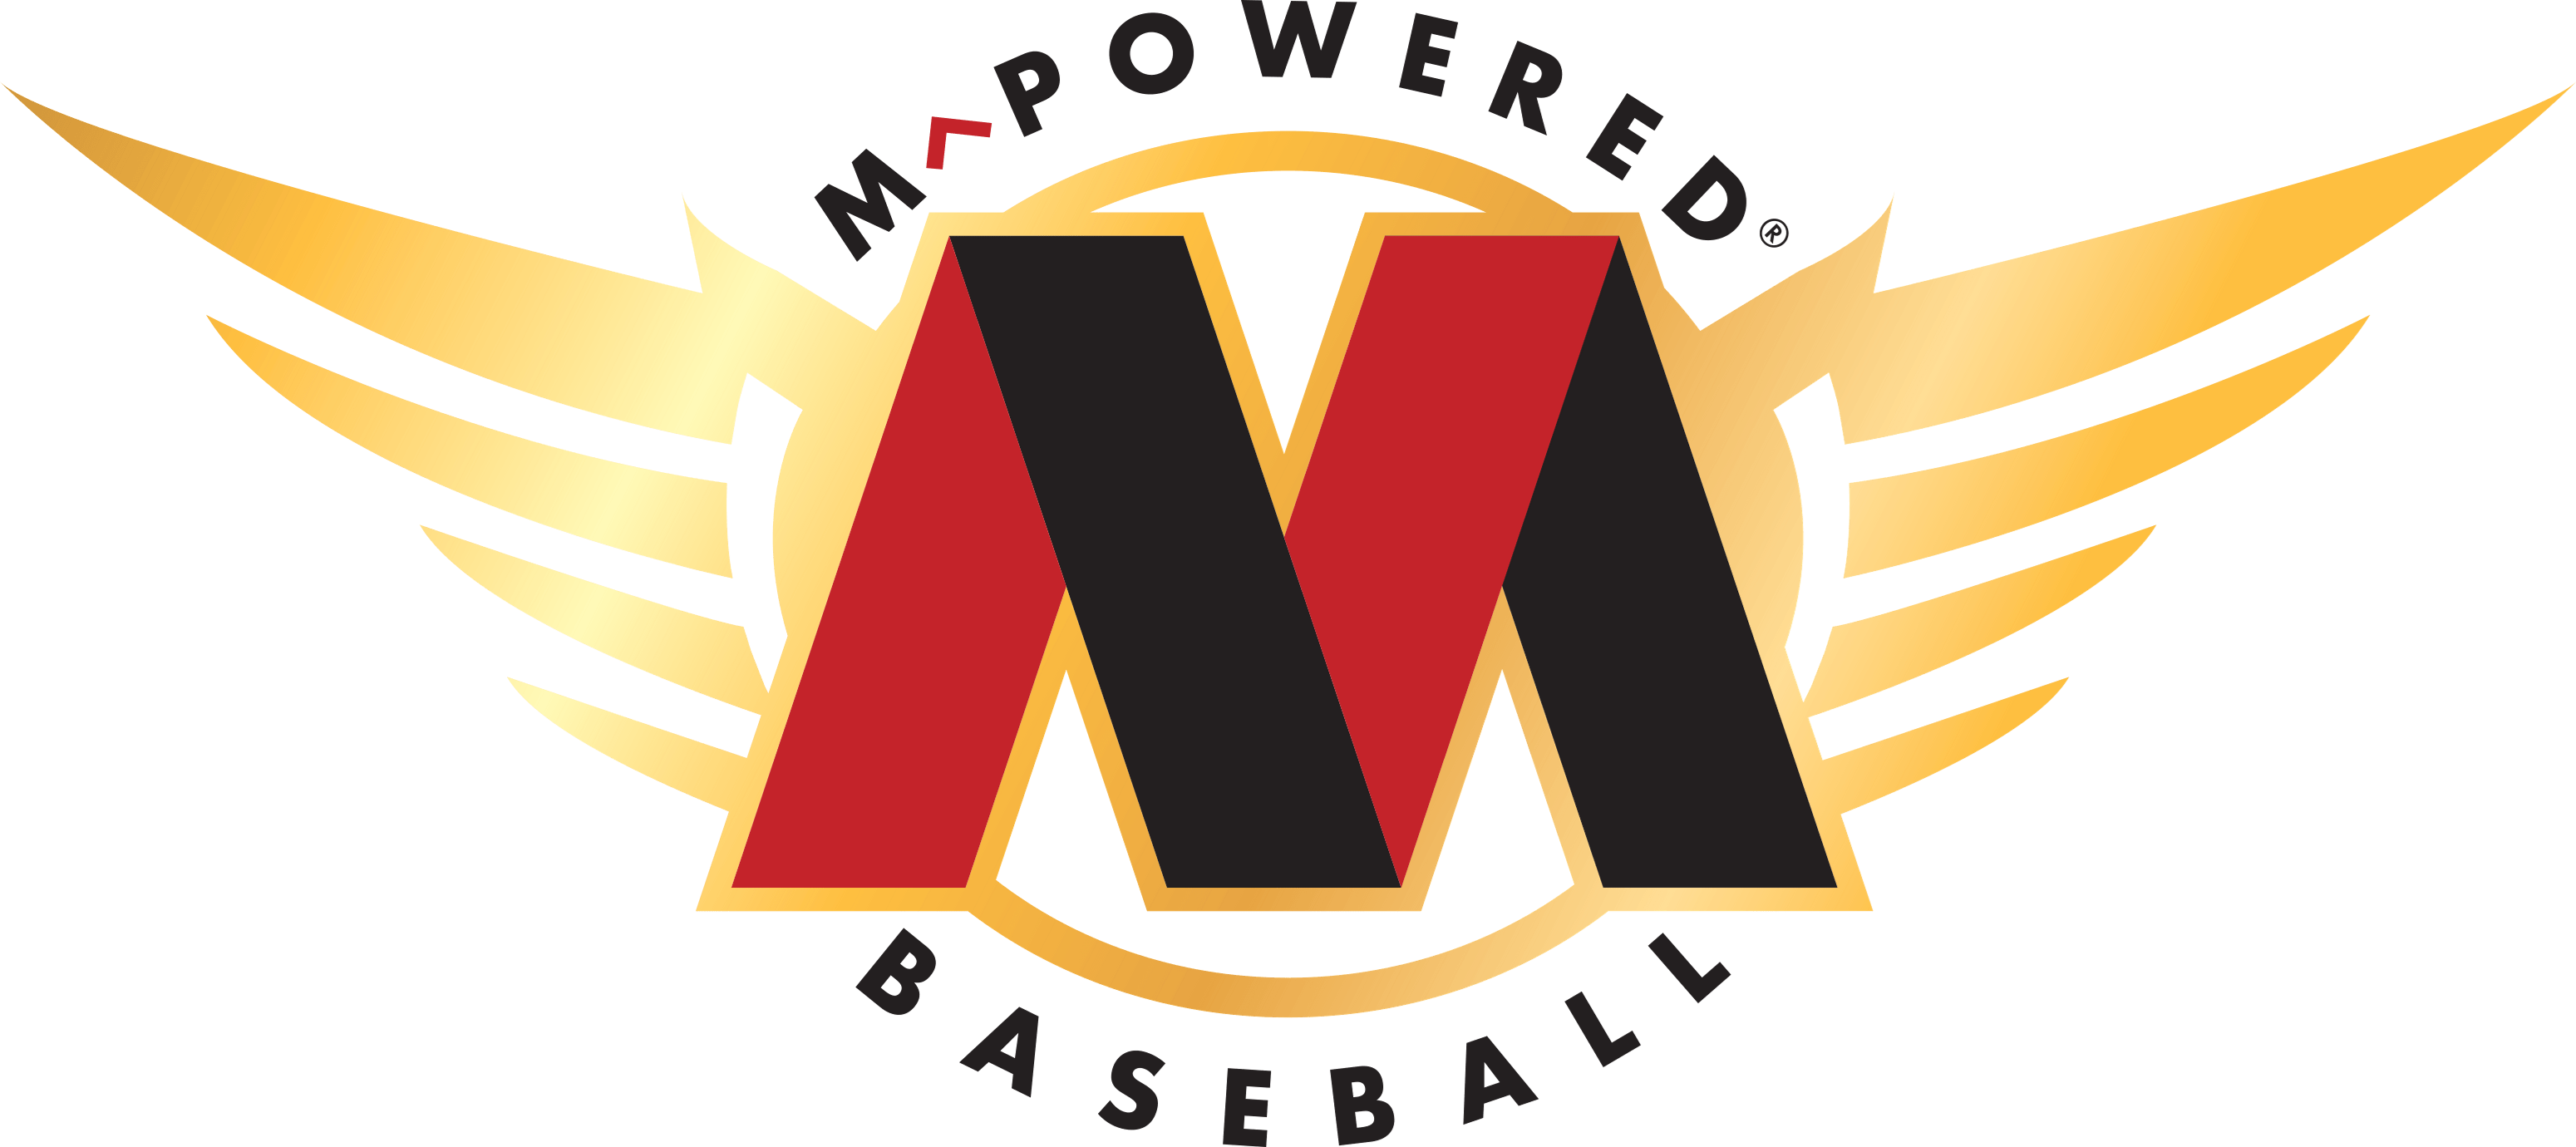 Baseball Bats with Bat Logo - M^Powered Ultra Lite Youth Maple Wood Baseball Bat. Baseball